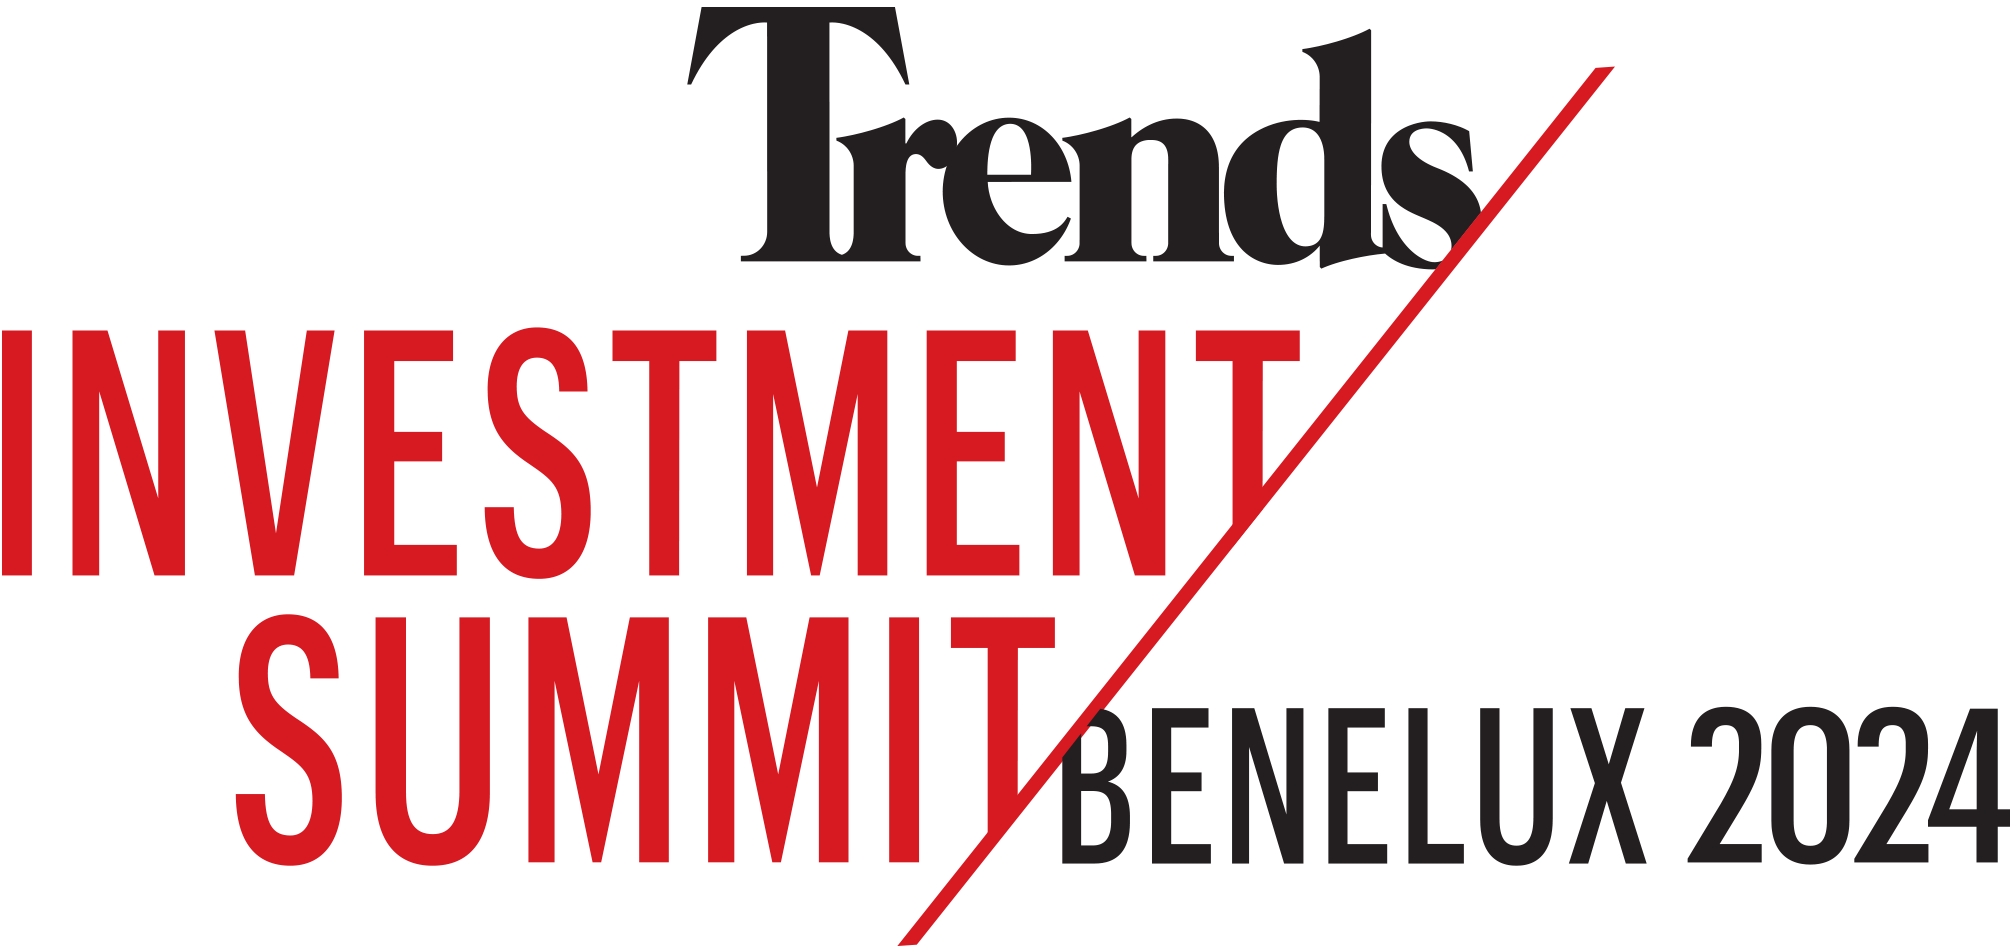 Trends Investment Summit Benelux 2022